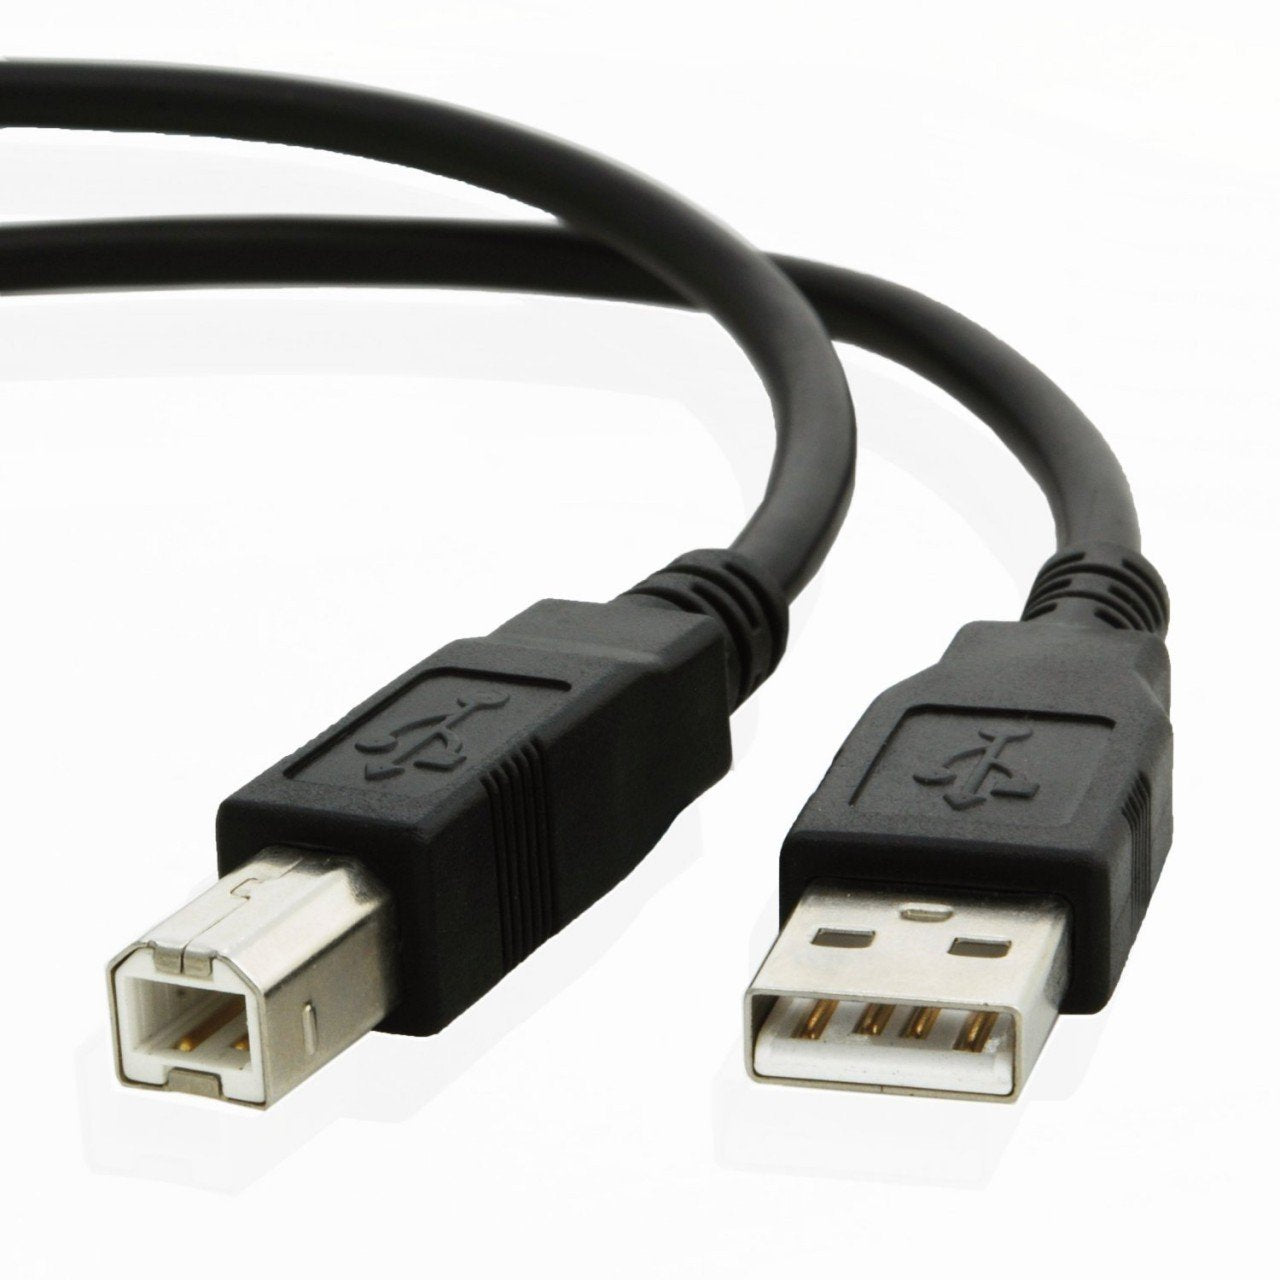 USB cable for Canon PIXMA MX310